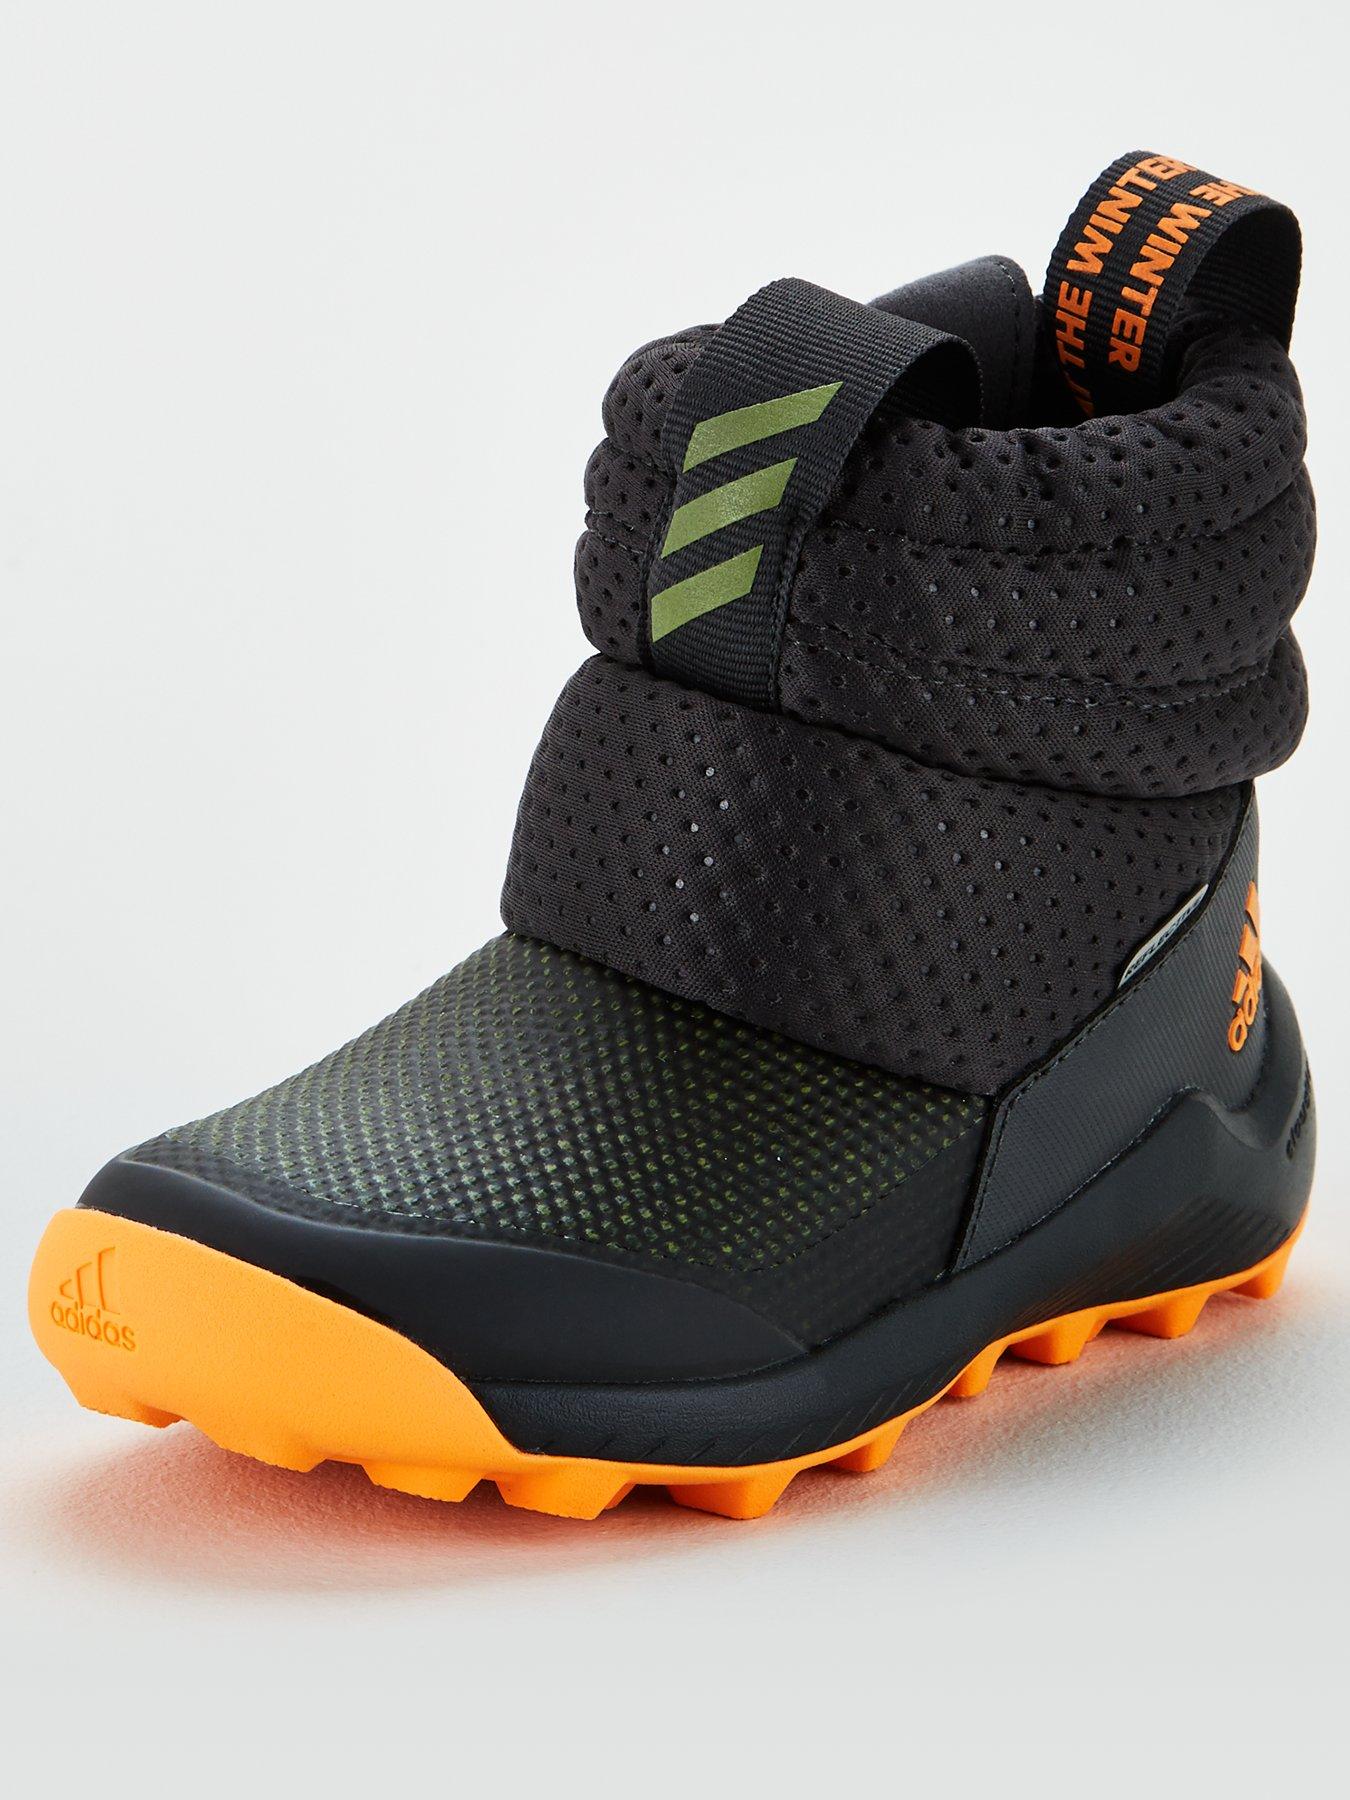 adidas Childrens Rapidasnow Snow Boots 